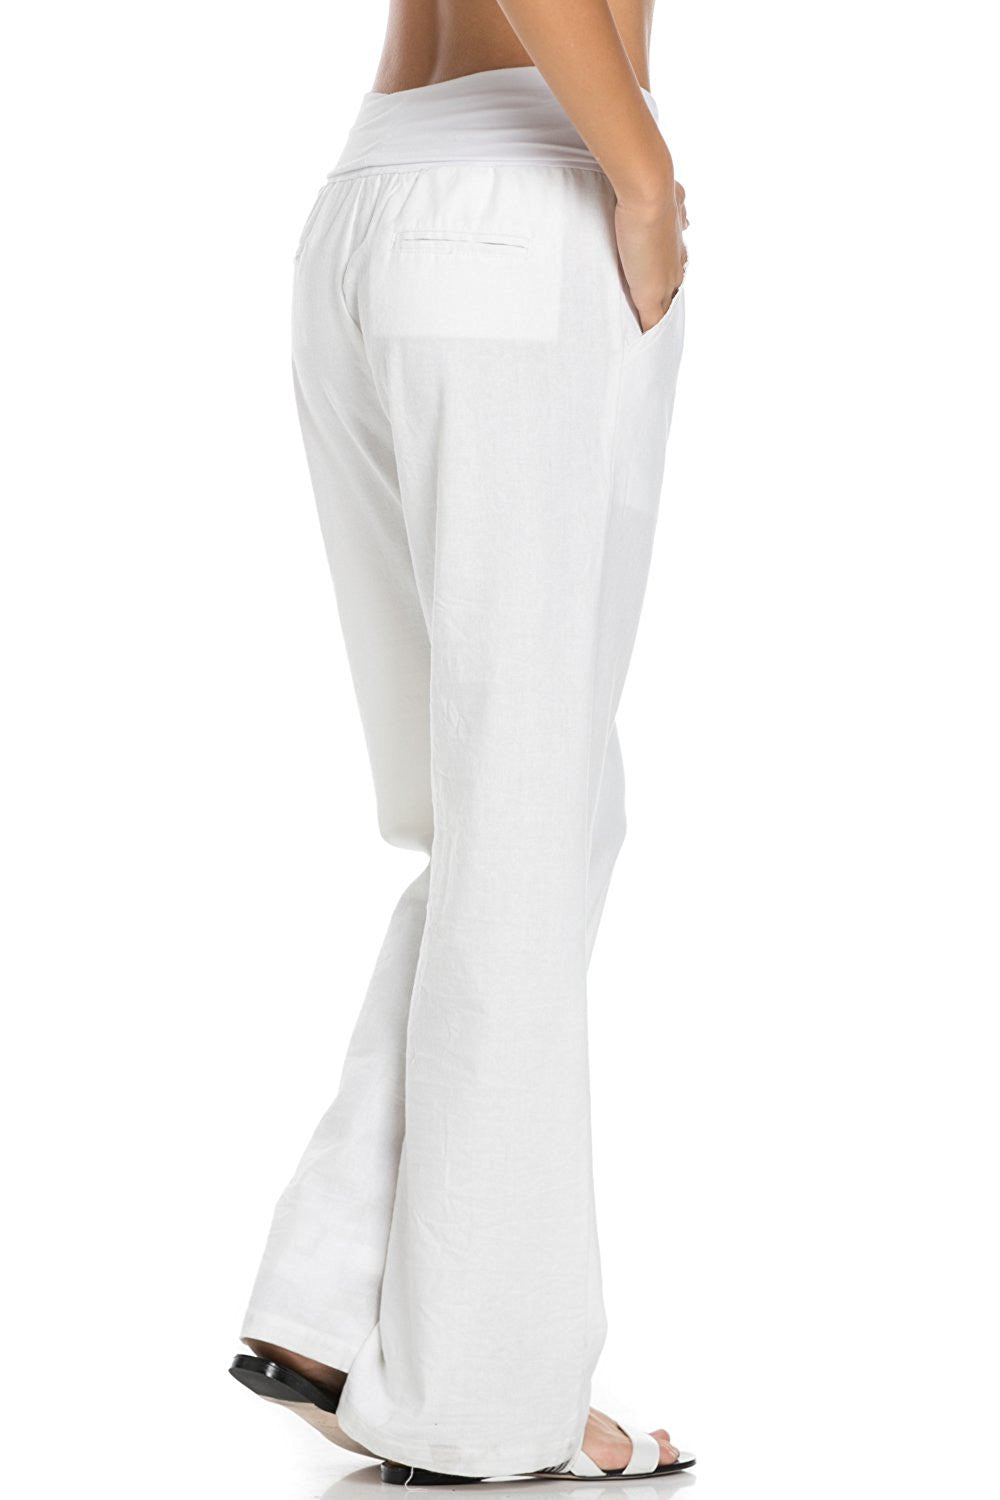 Poplooks Women's Comfy Fold Over Linen Pants (White)